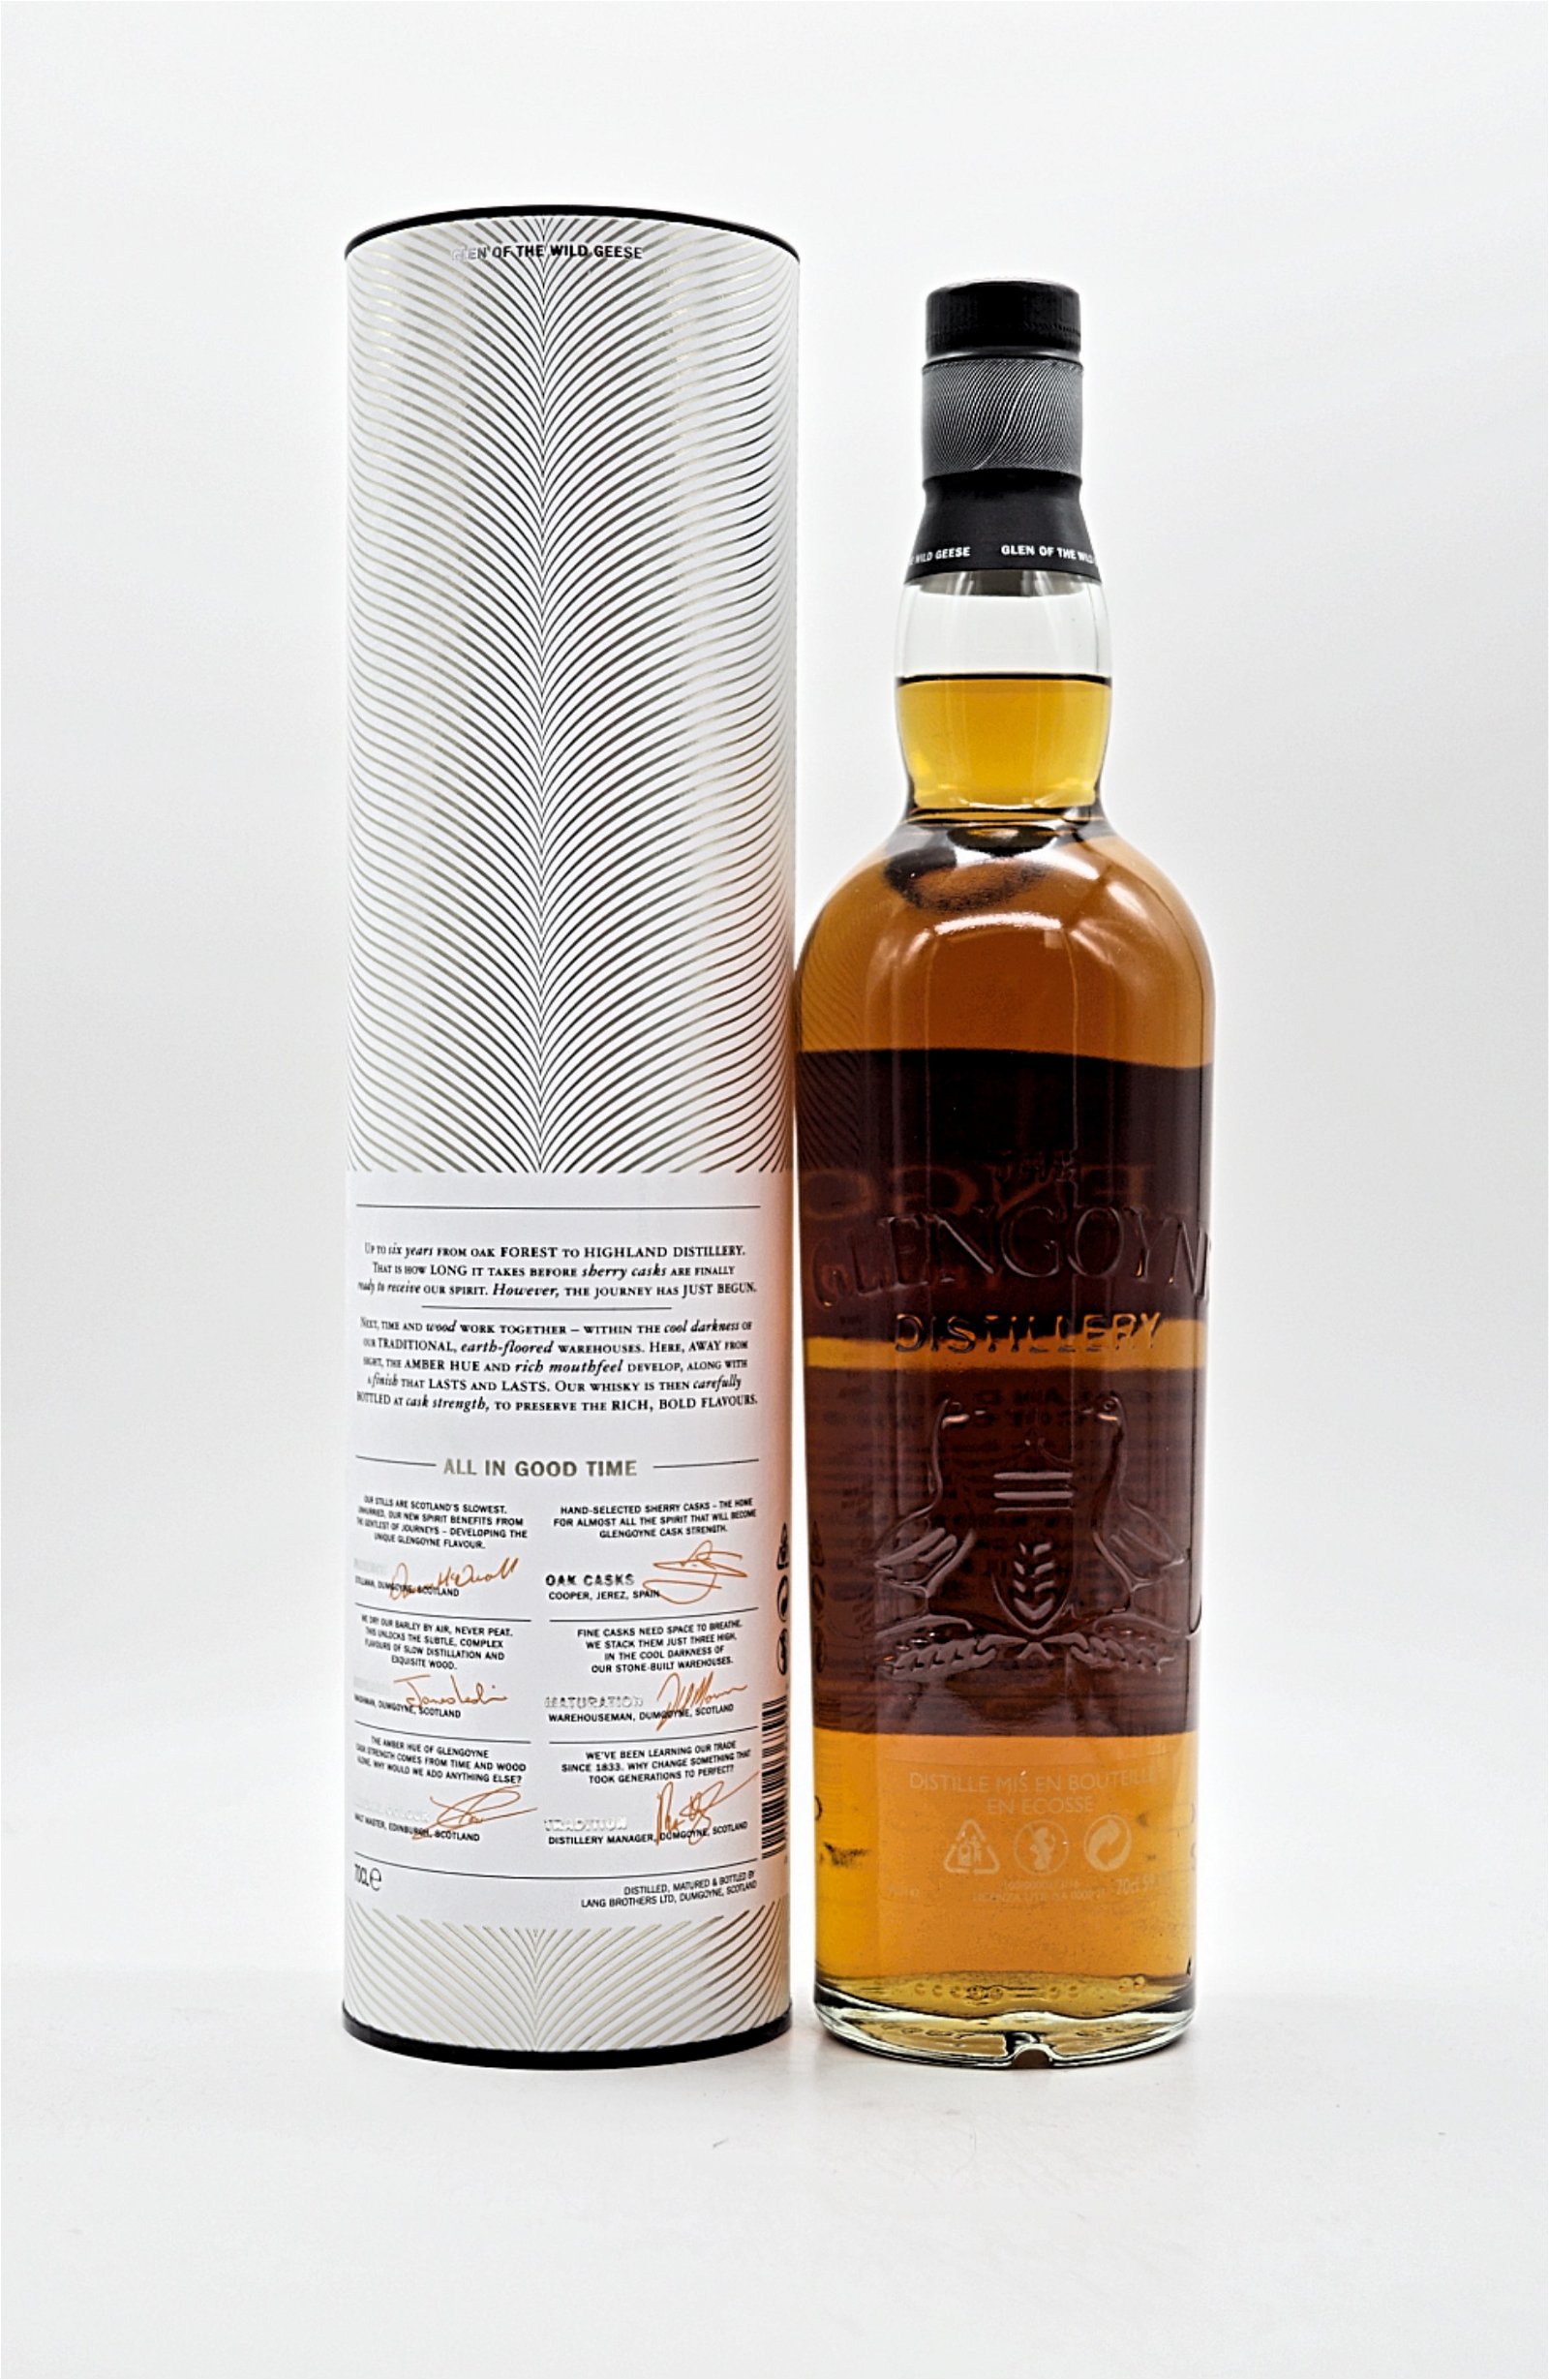 Glengoyne Un-Chillfiltered and Cask Strength Highland Single Malt Scotch Whisky